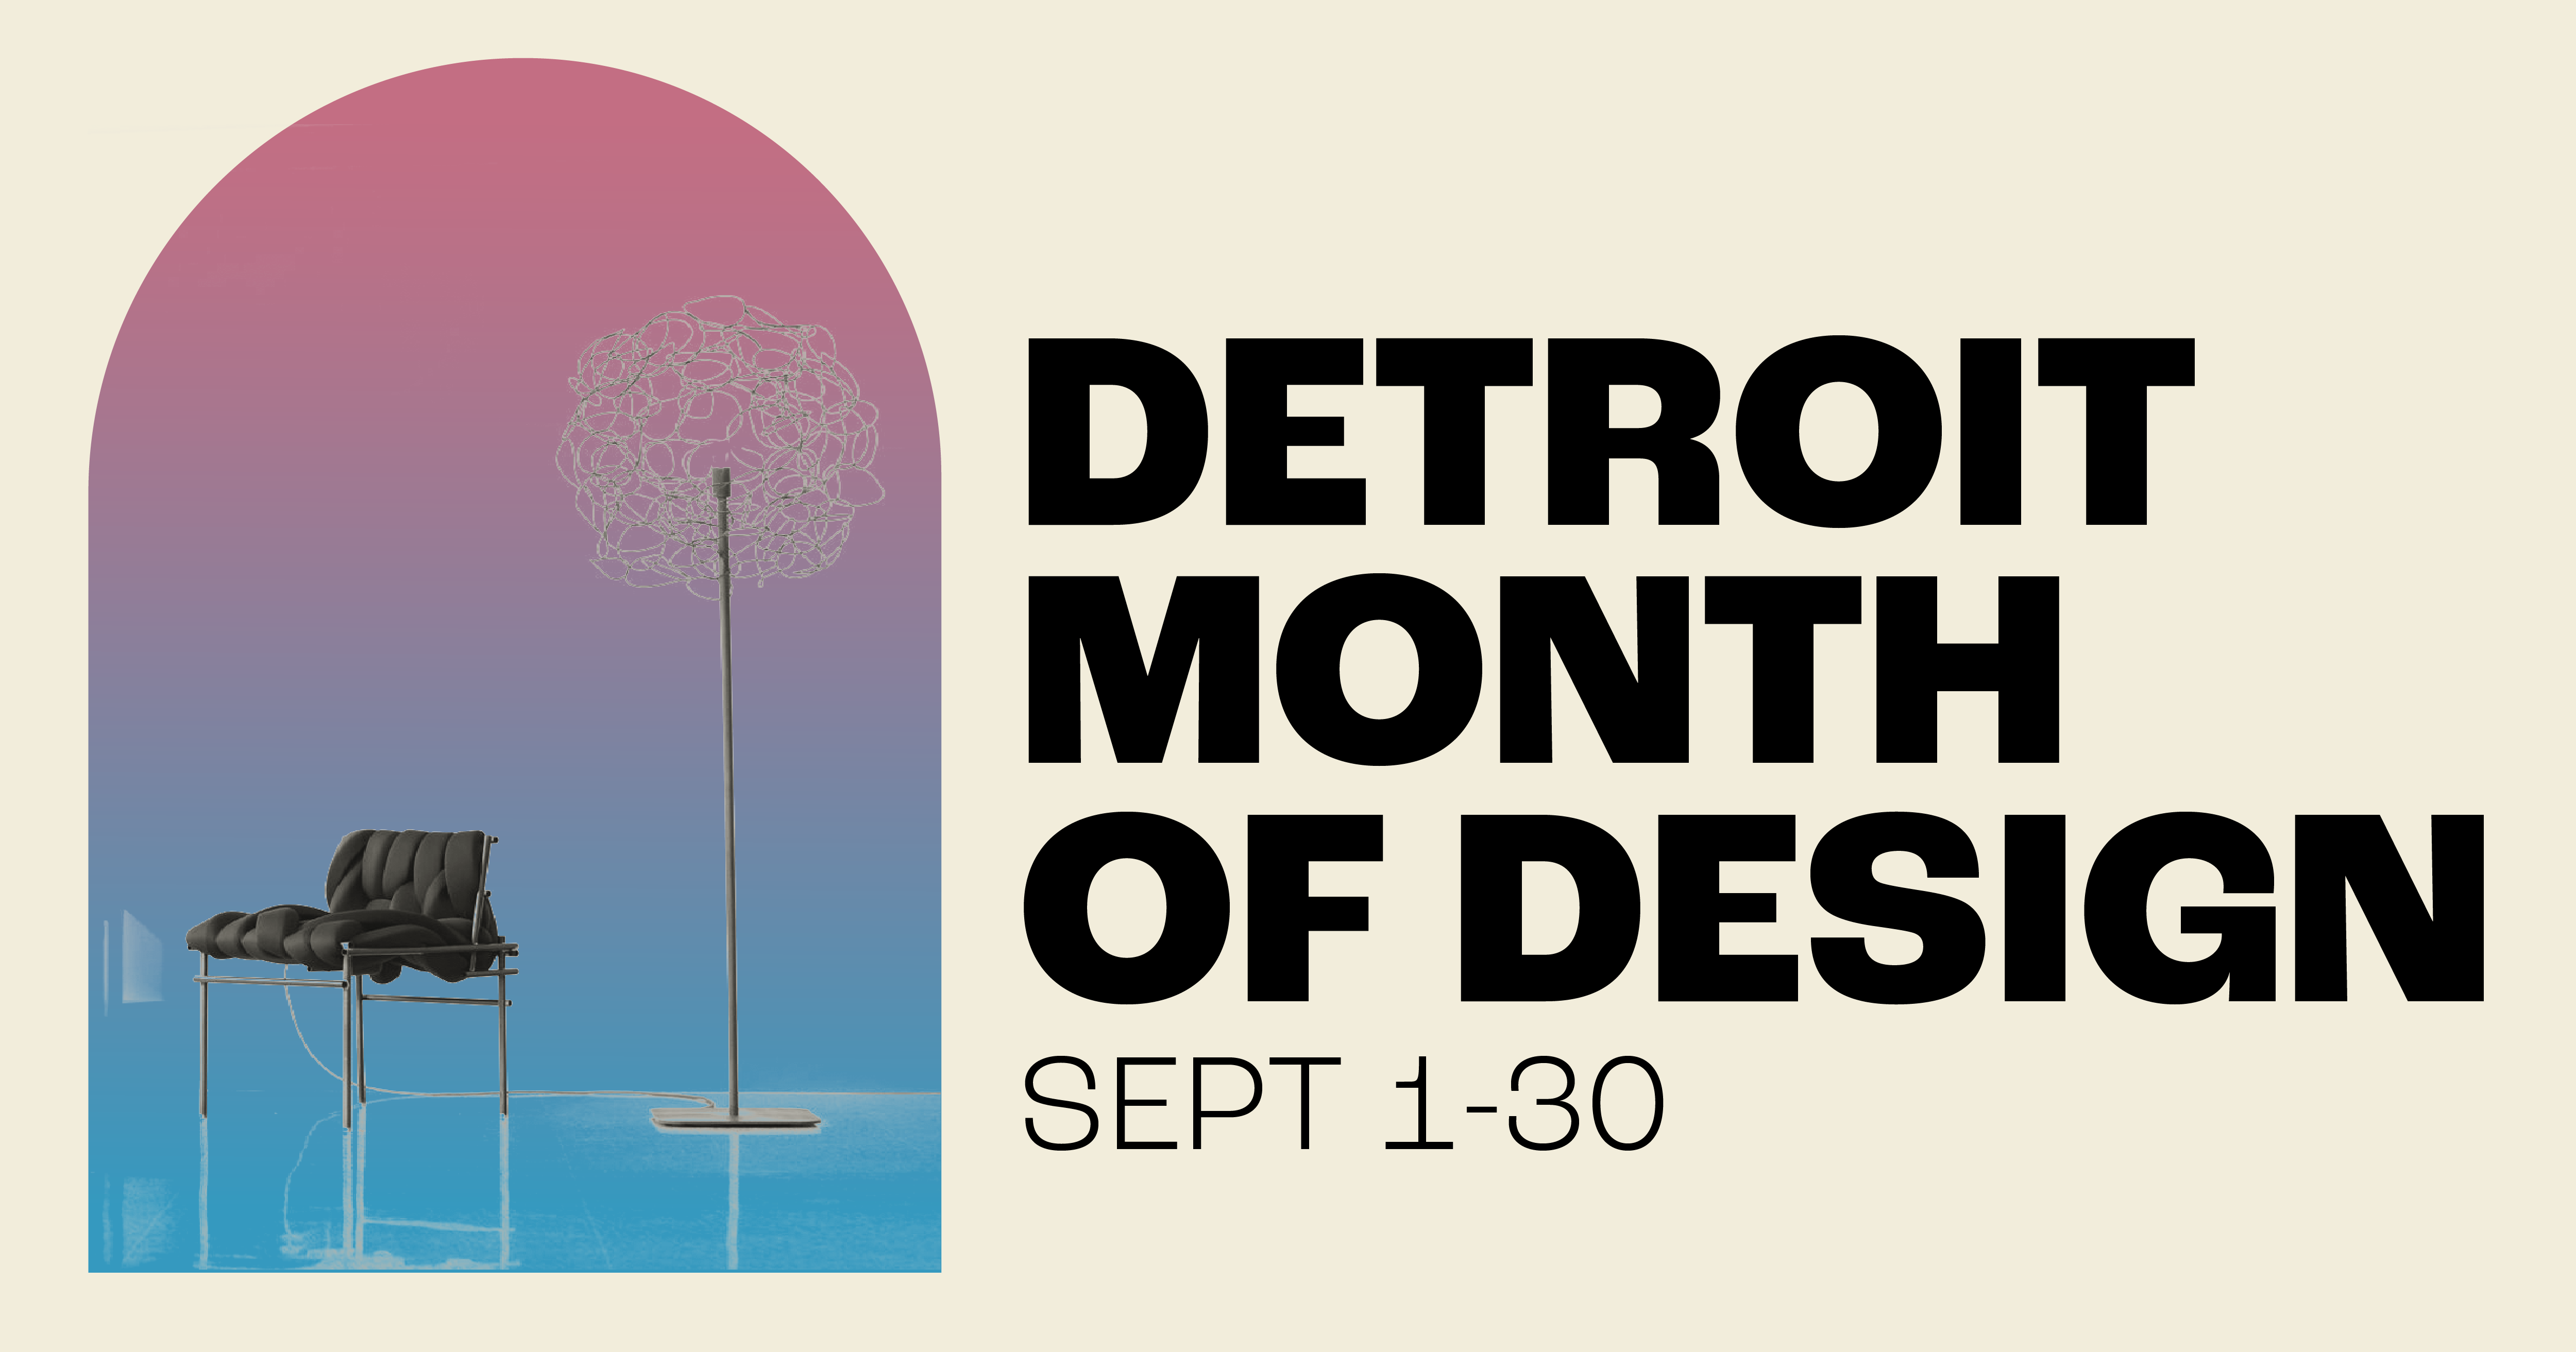 Poster: Detroit Month of Design, Sept 1-30